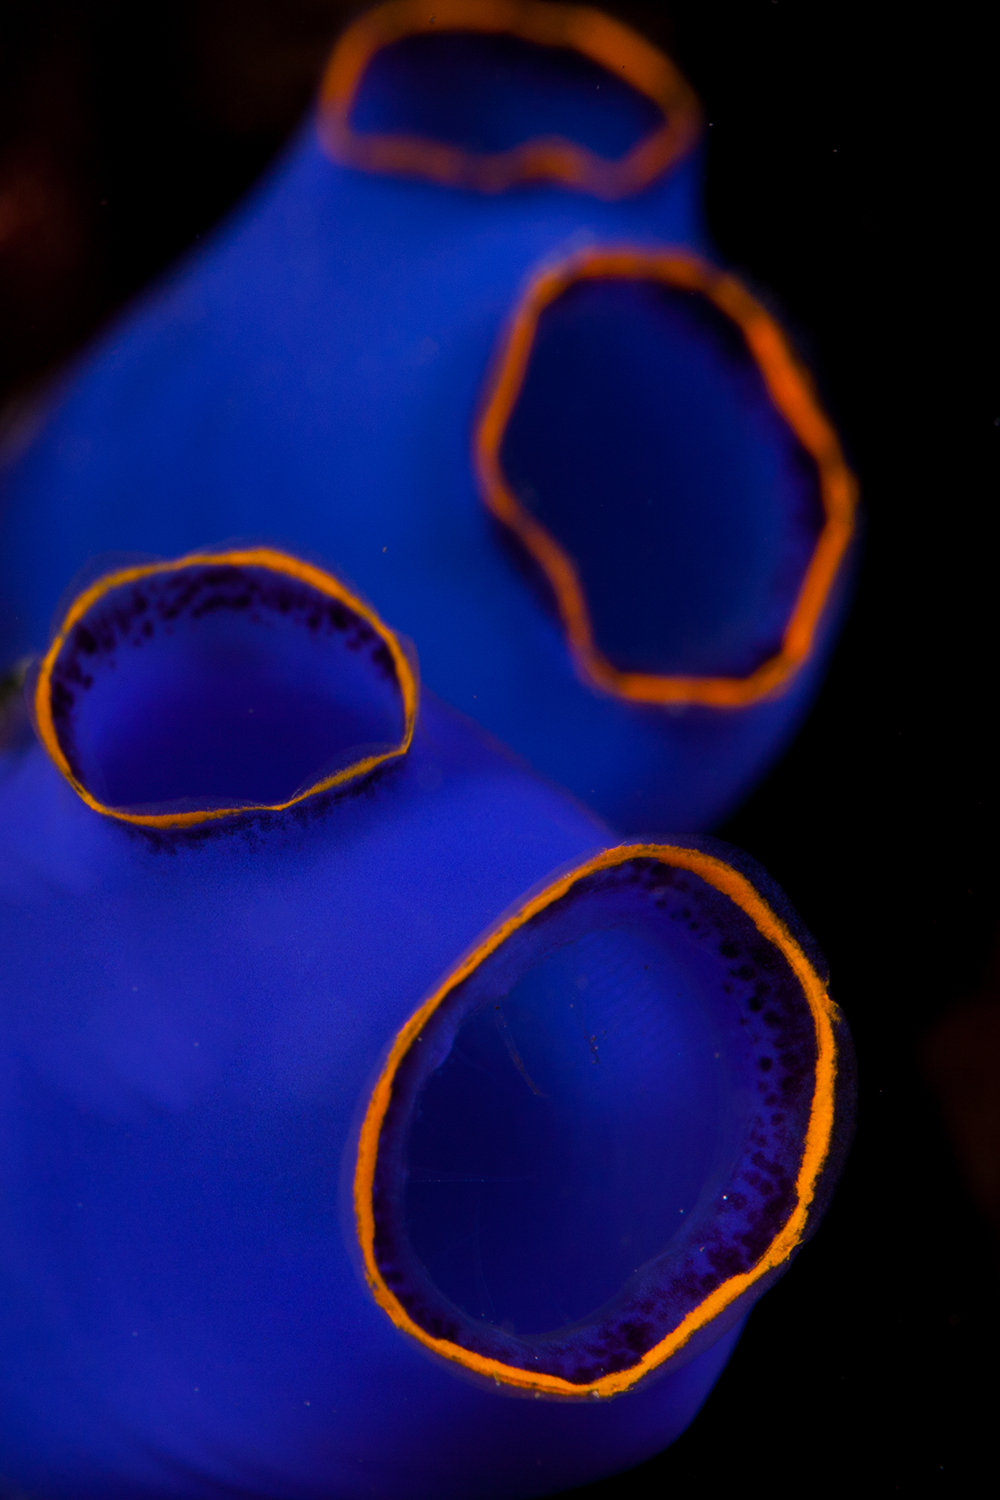 Tunicado azul / Blue tunicate